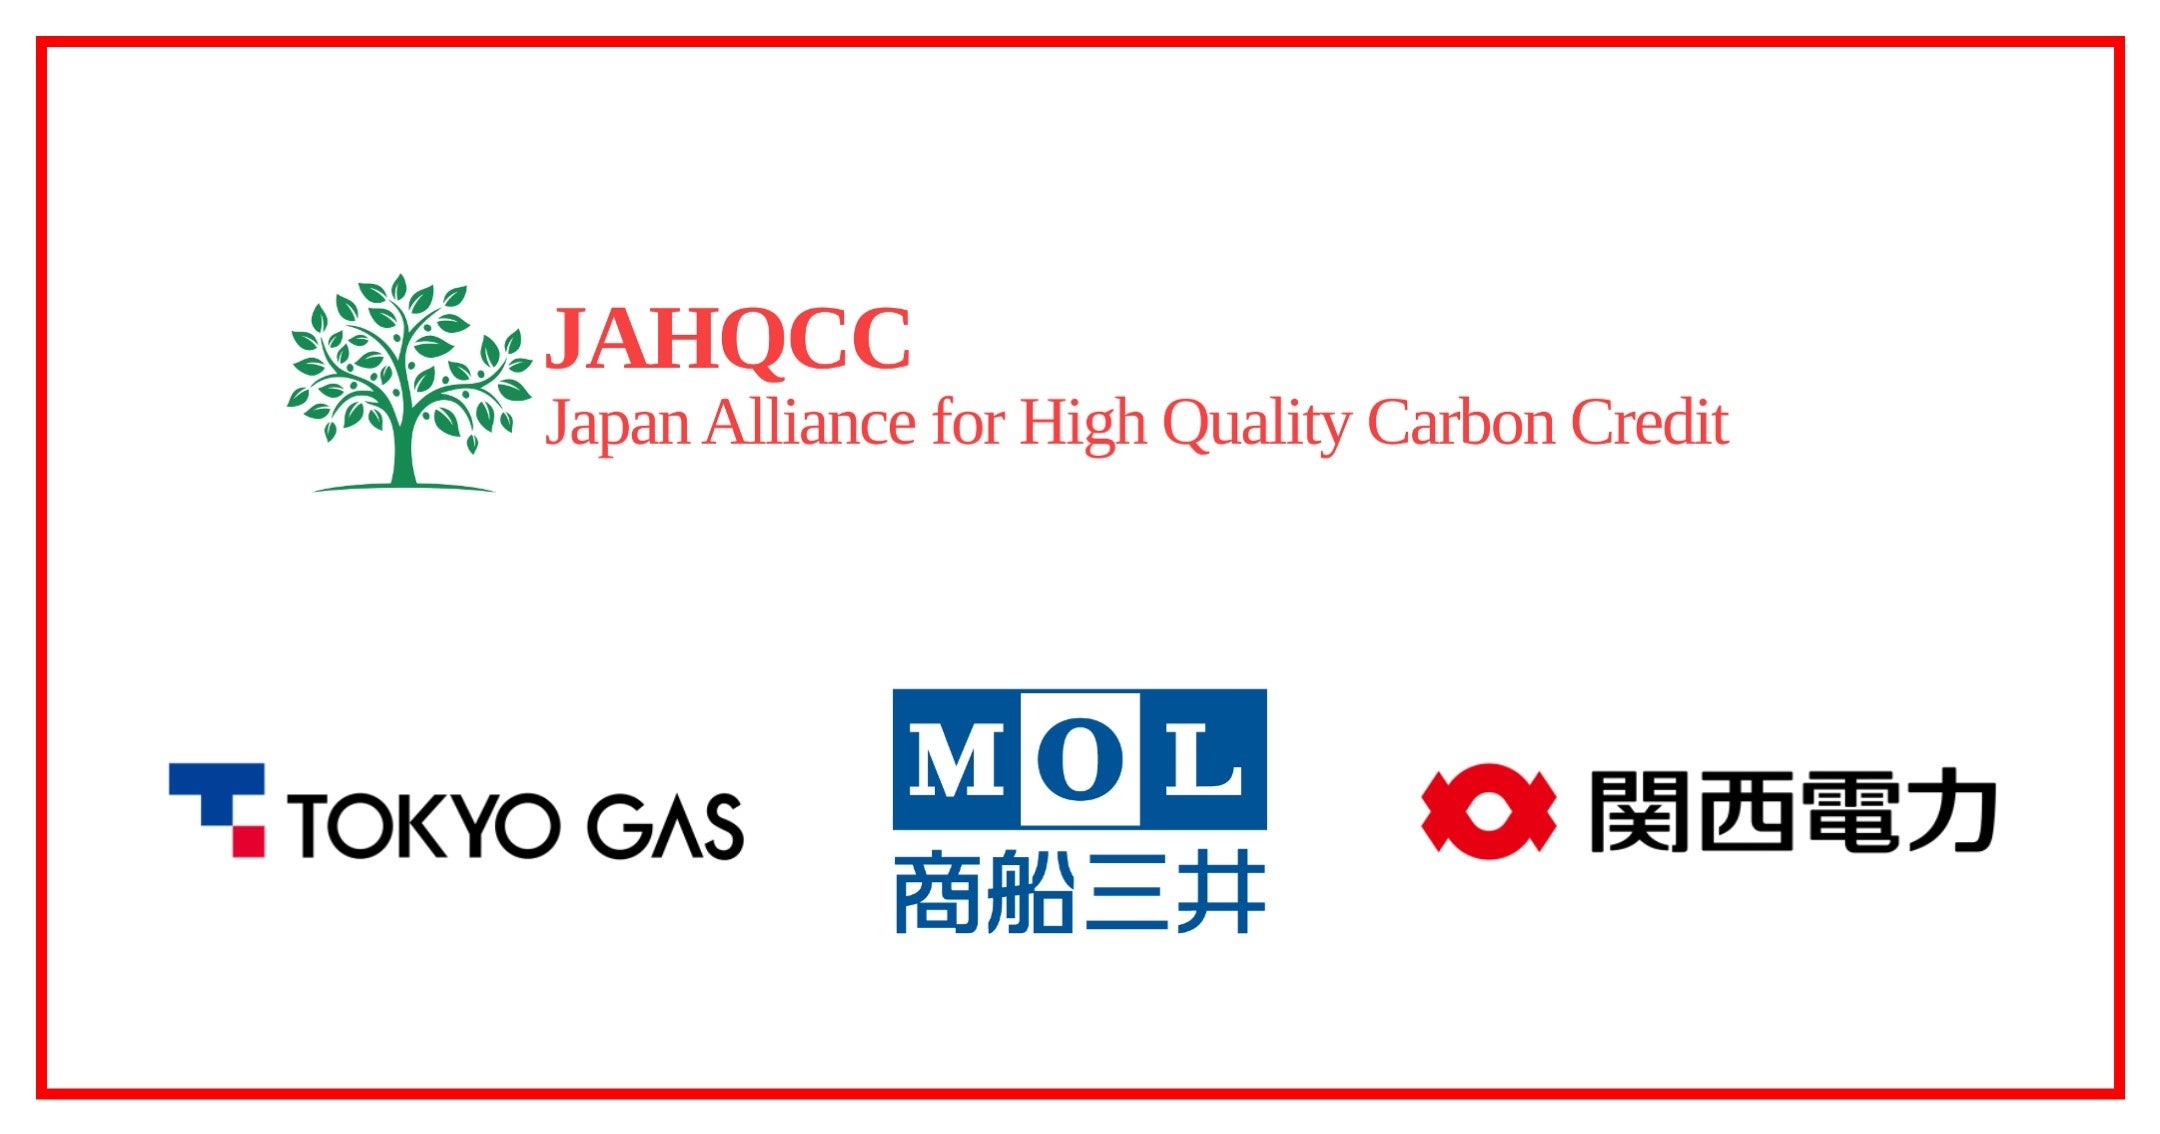 KXA֐d́ADO䂪JAHQCC (Japan Alliance for High Quality Carbon Credit)ɉ